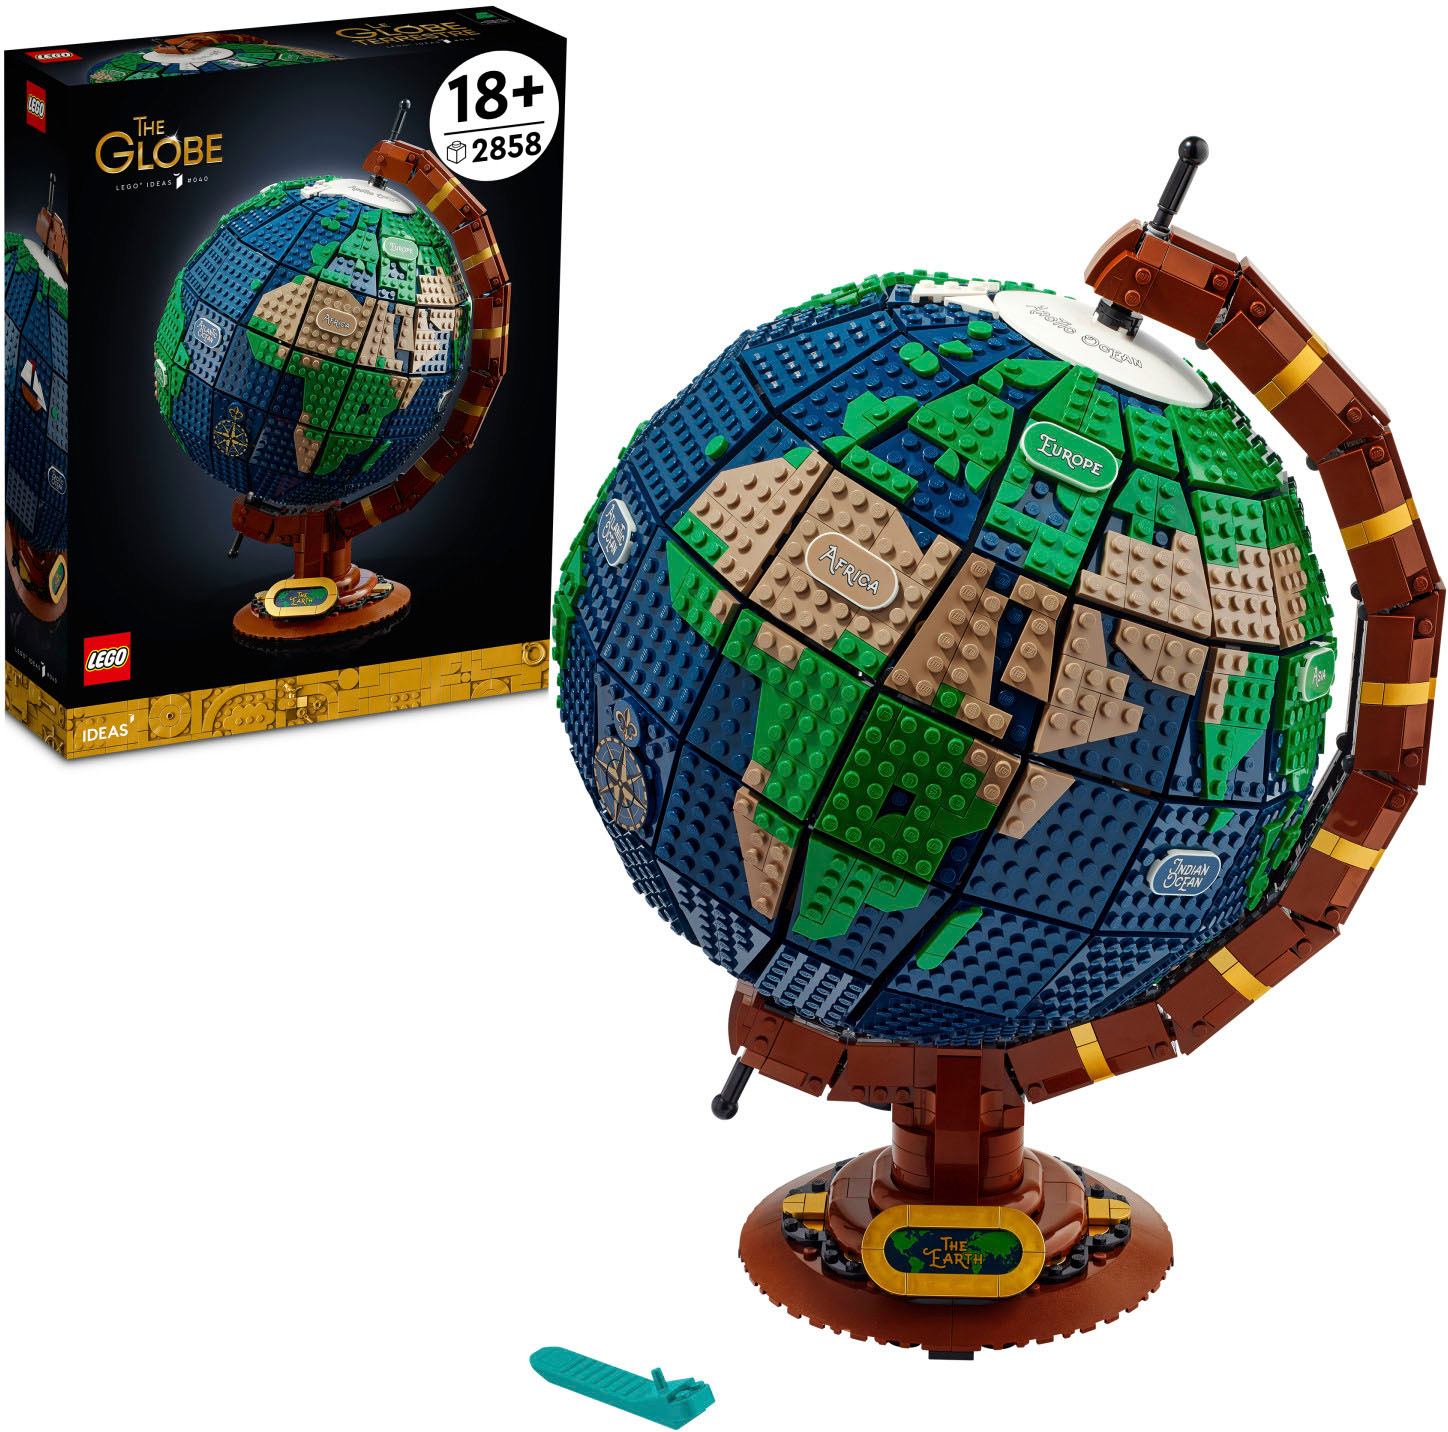 Lego Ideas The Globe 21332 Building Set